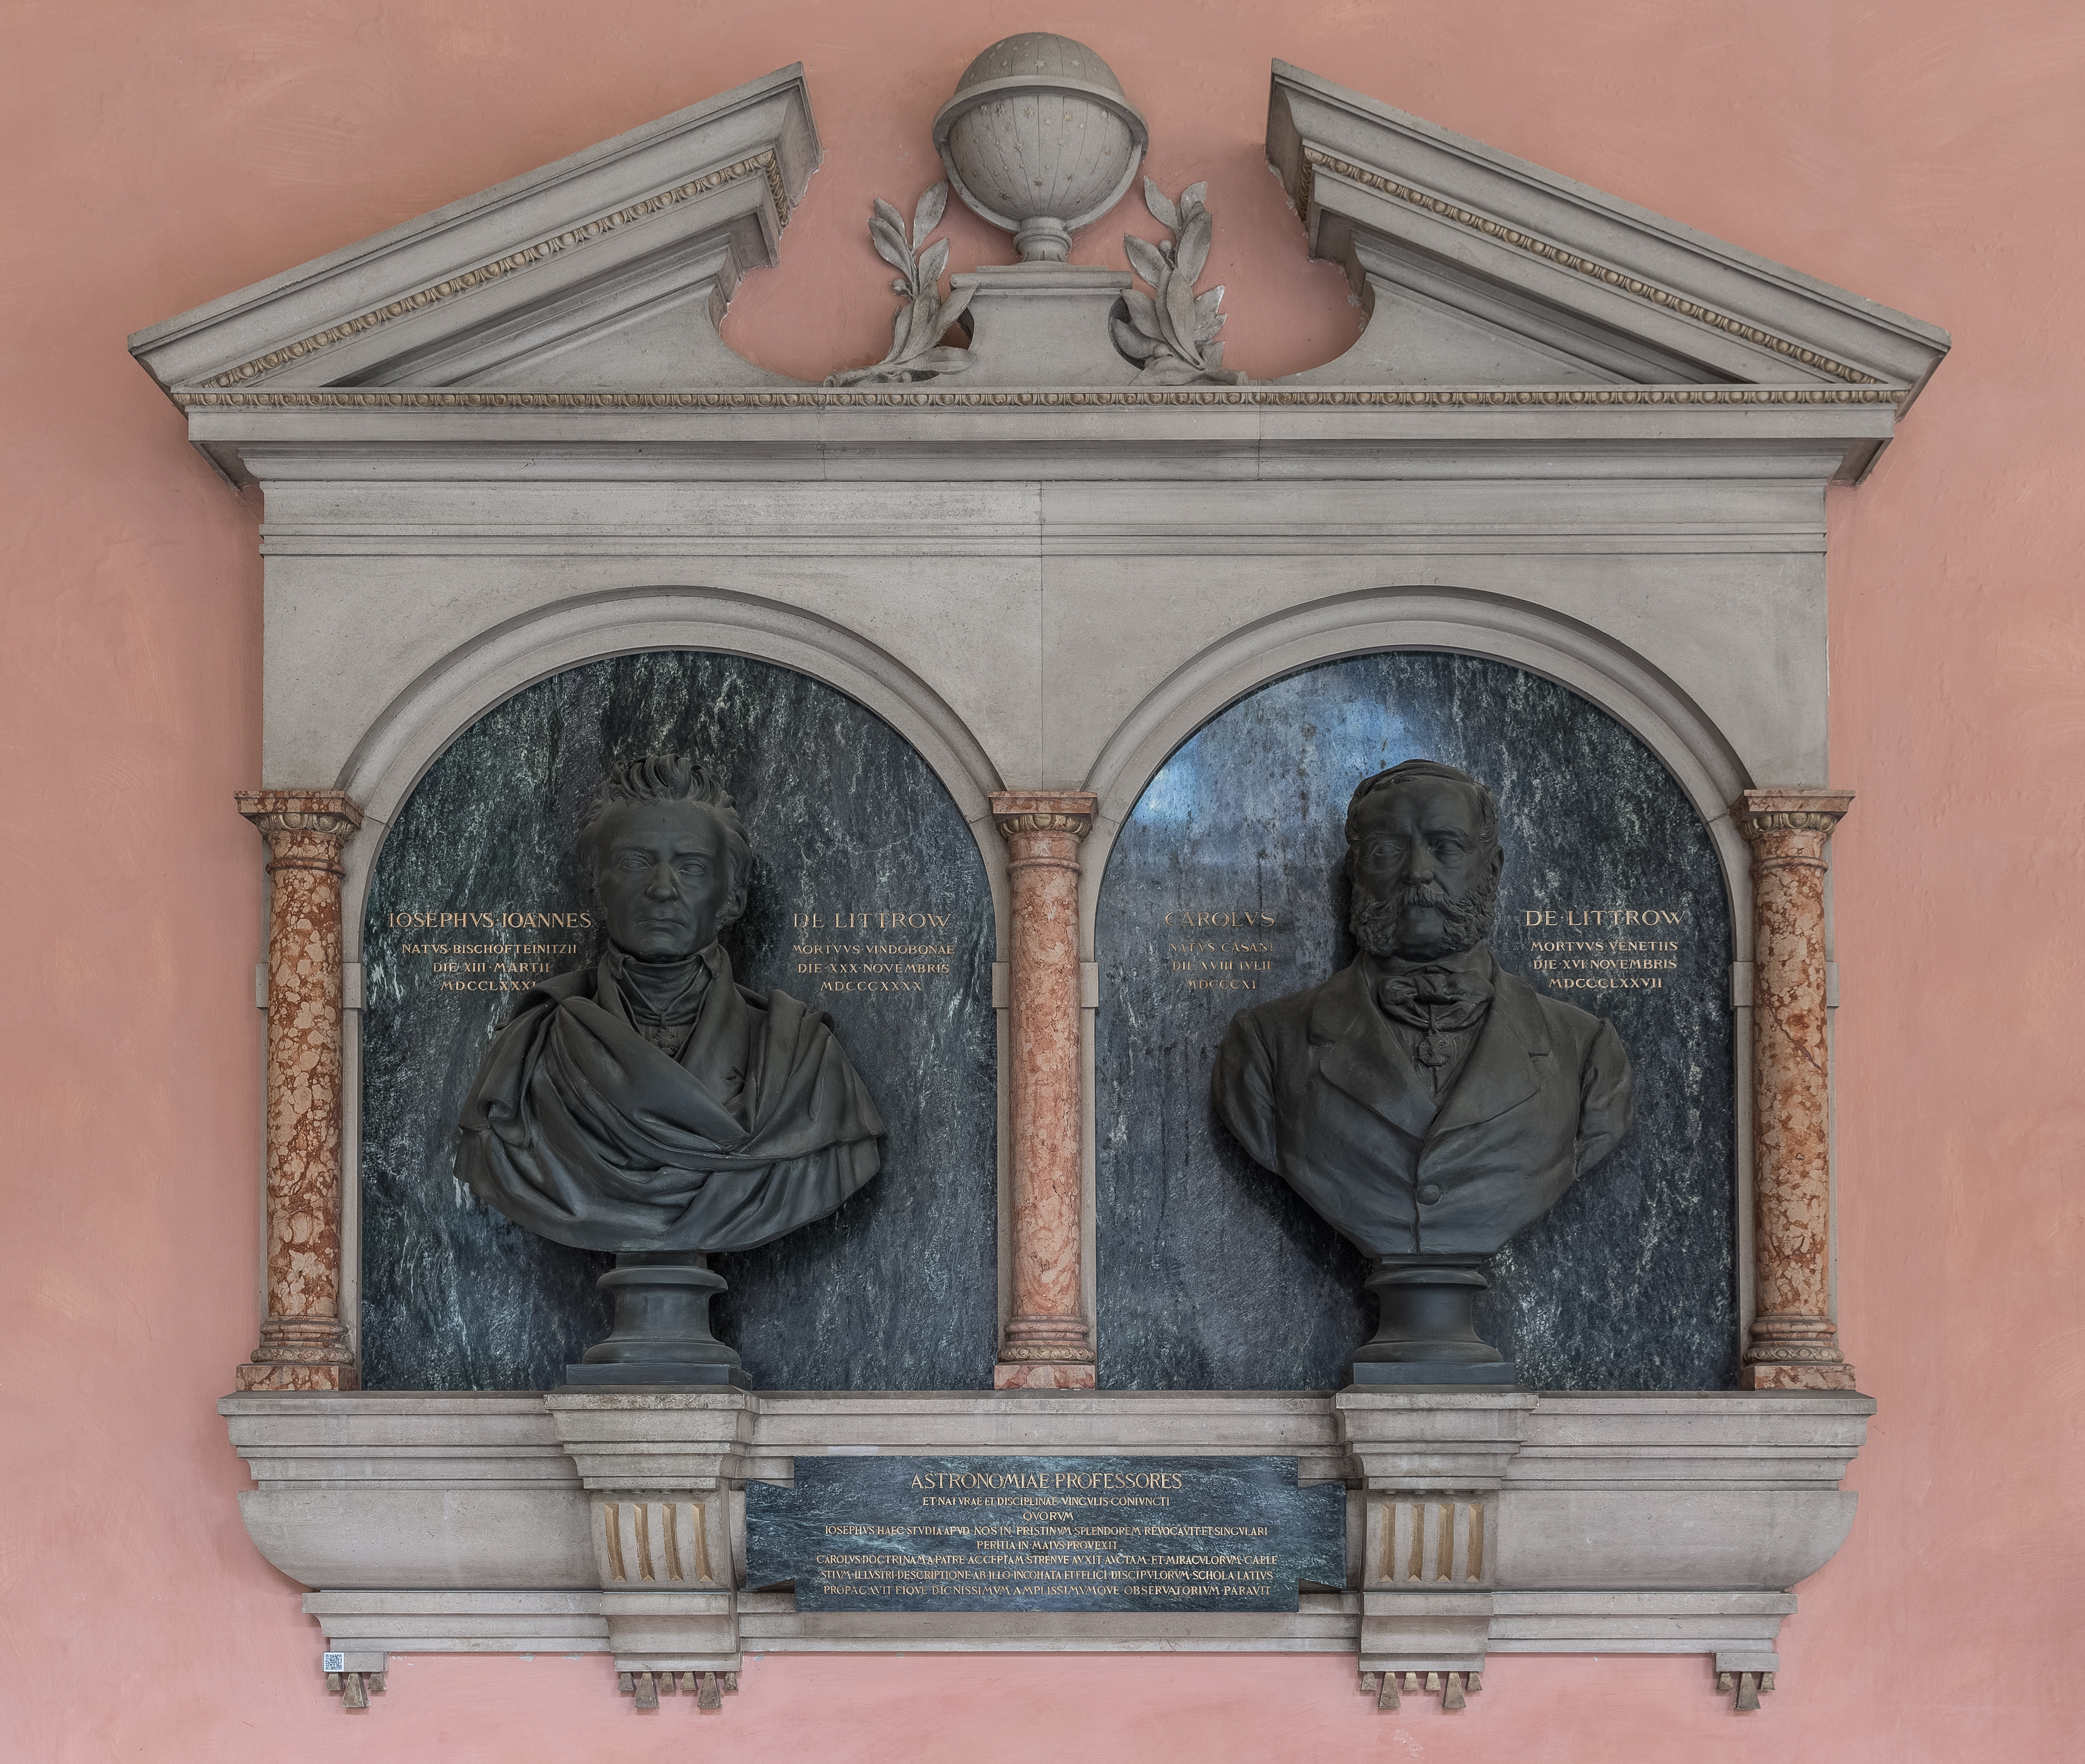 Karl and Johannes von Littrow, Nr 96 bust ensemble (bronze) in the Arkadenhof of the University of Vienna-2379-HDR